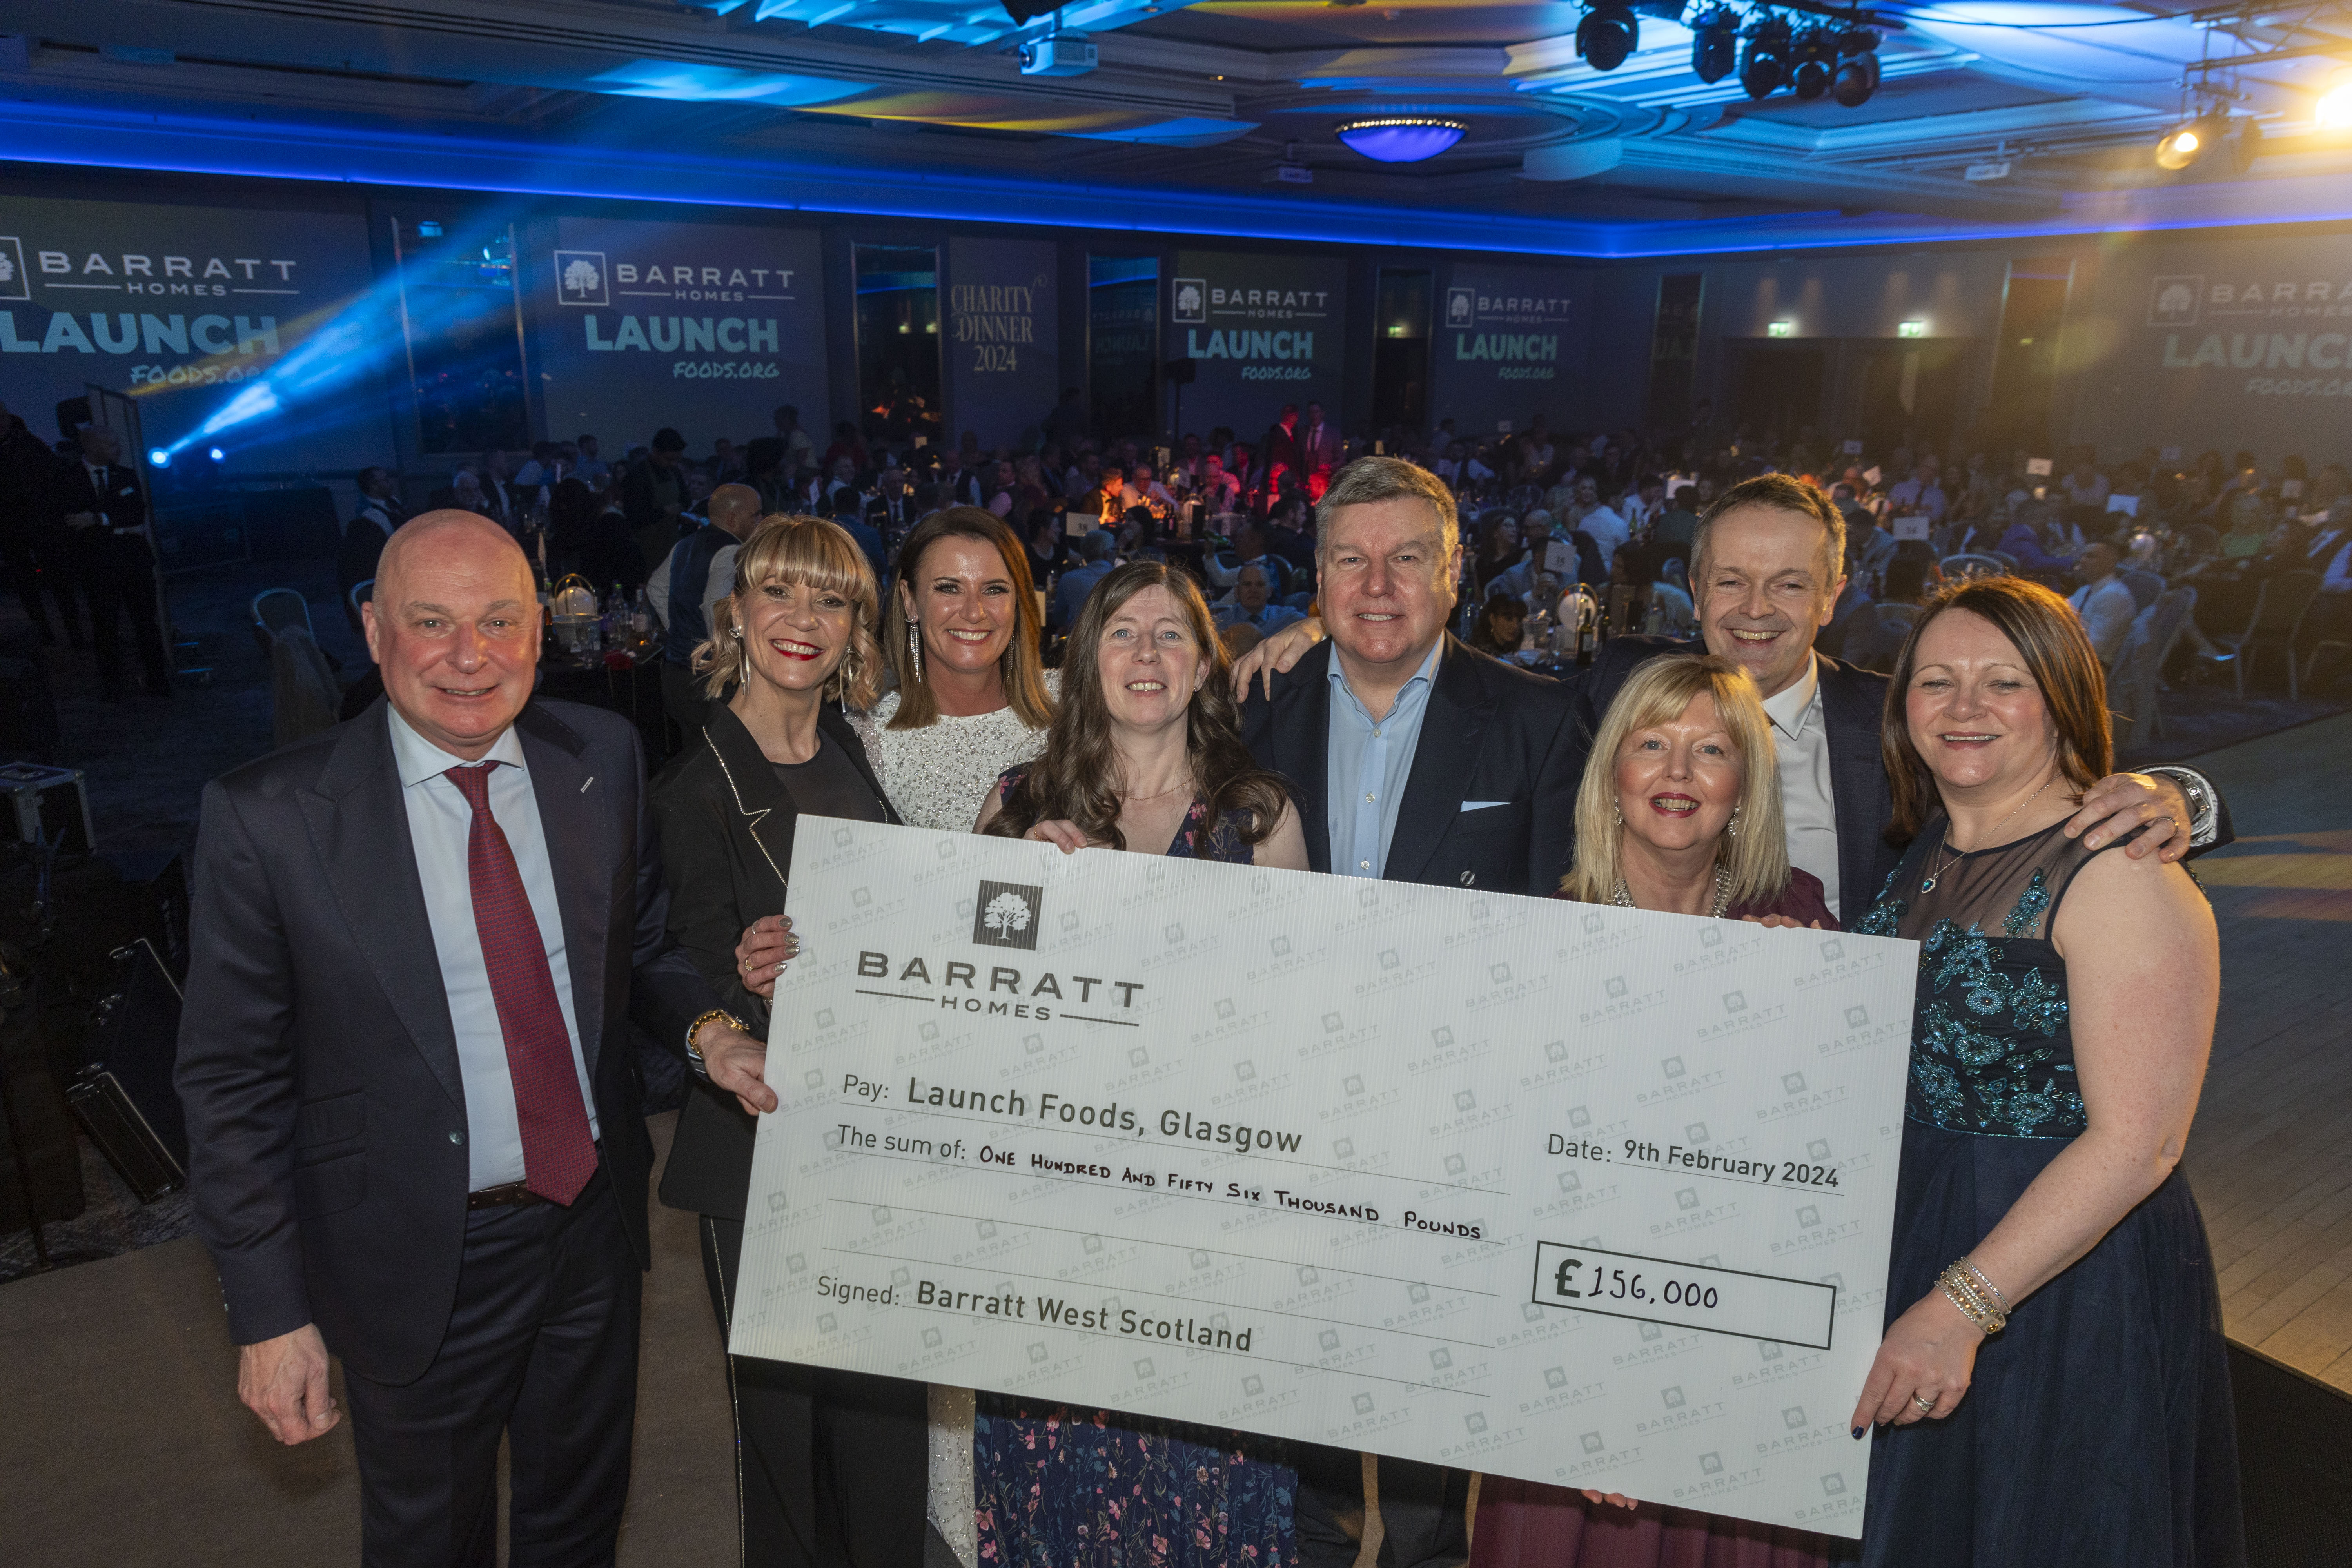 Barratt raises over £150,000 to help support Glasgow families